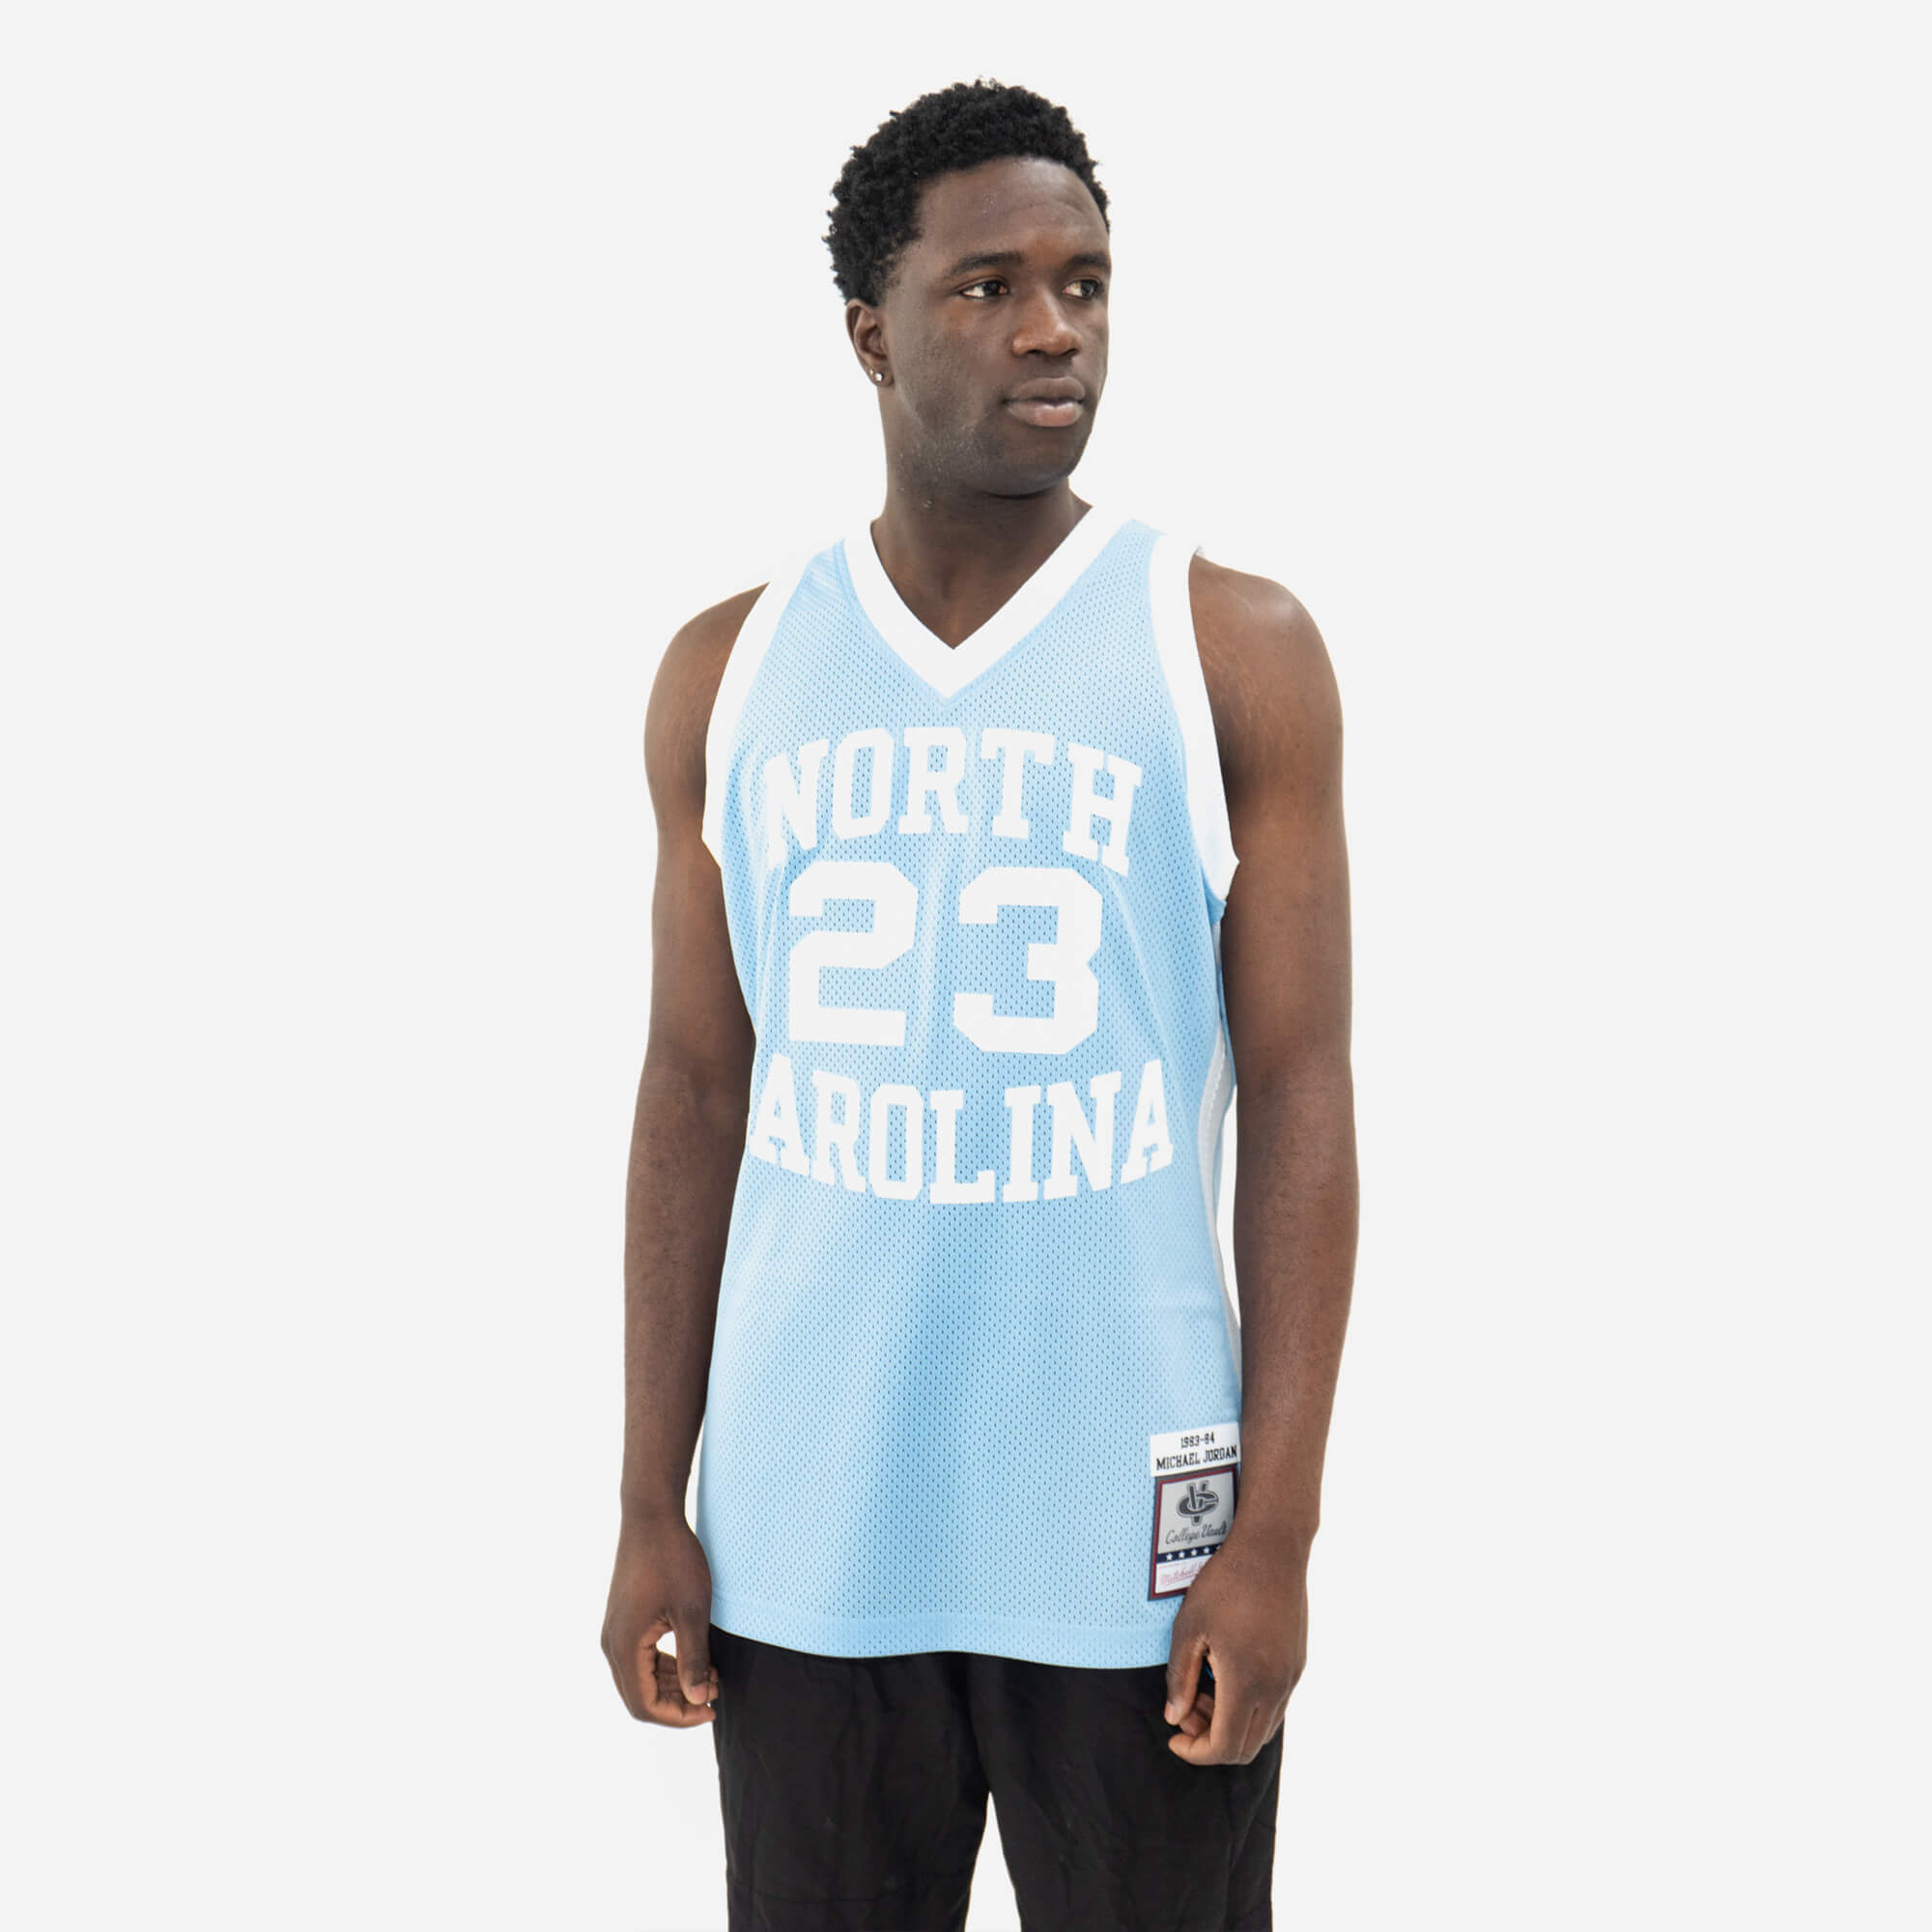 Michael Jordan's game-worn North Carolina jersey sells for record £1m